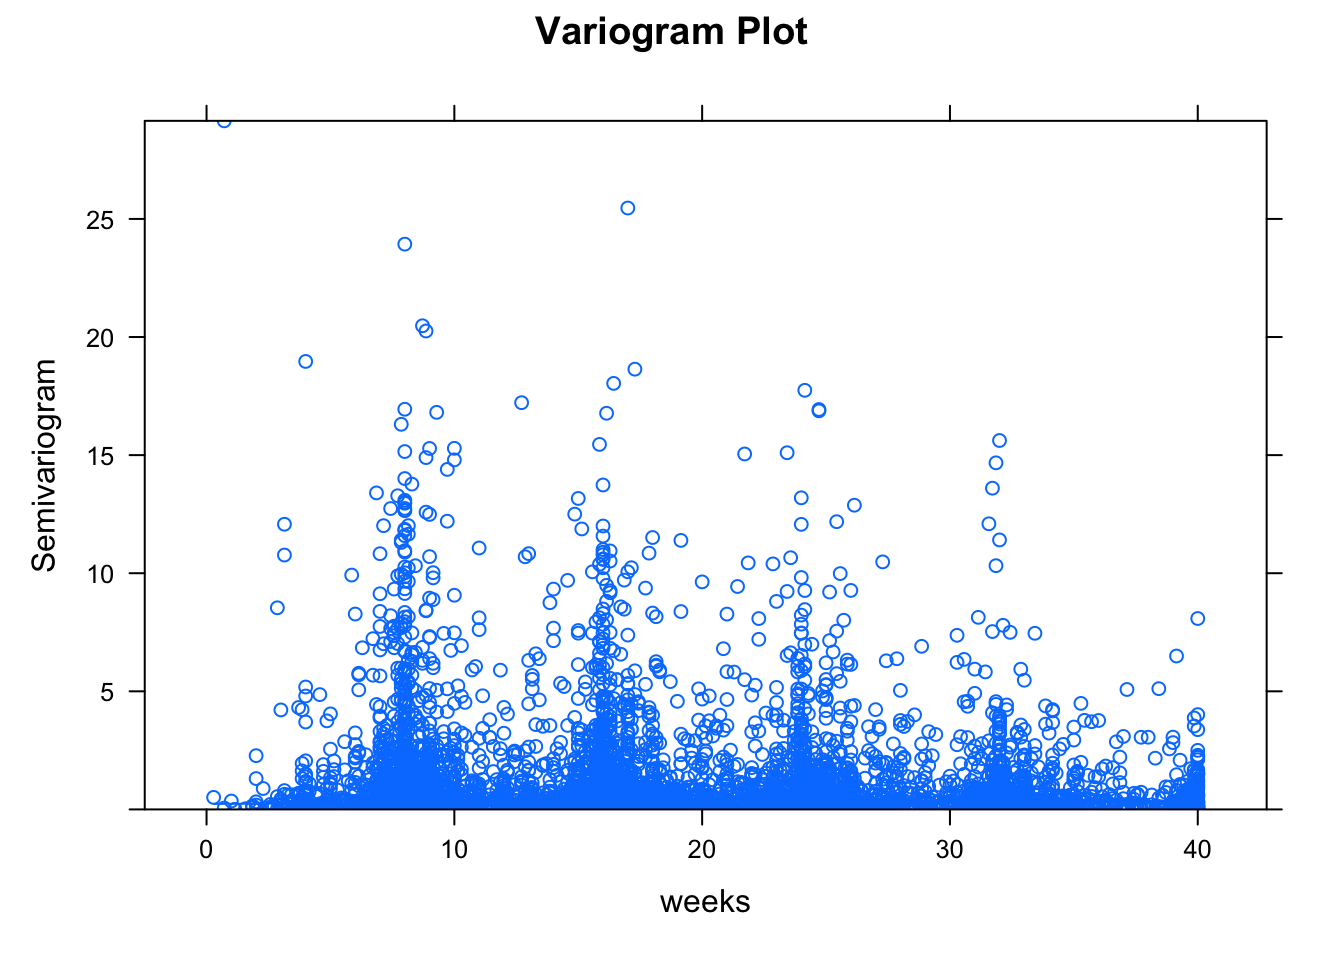 Variogram plot used to assess serial correlation in the fitted model: Model 6.